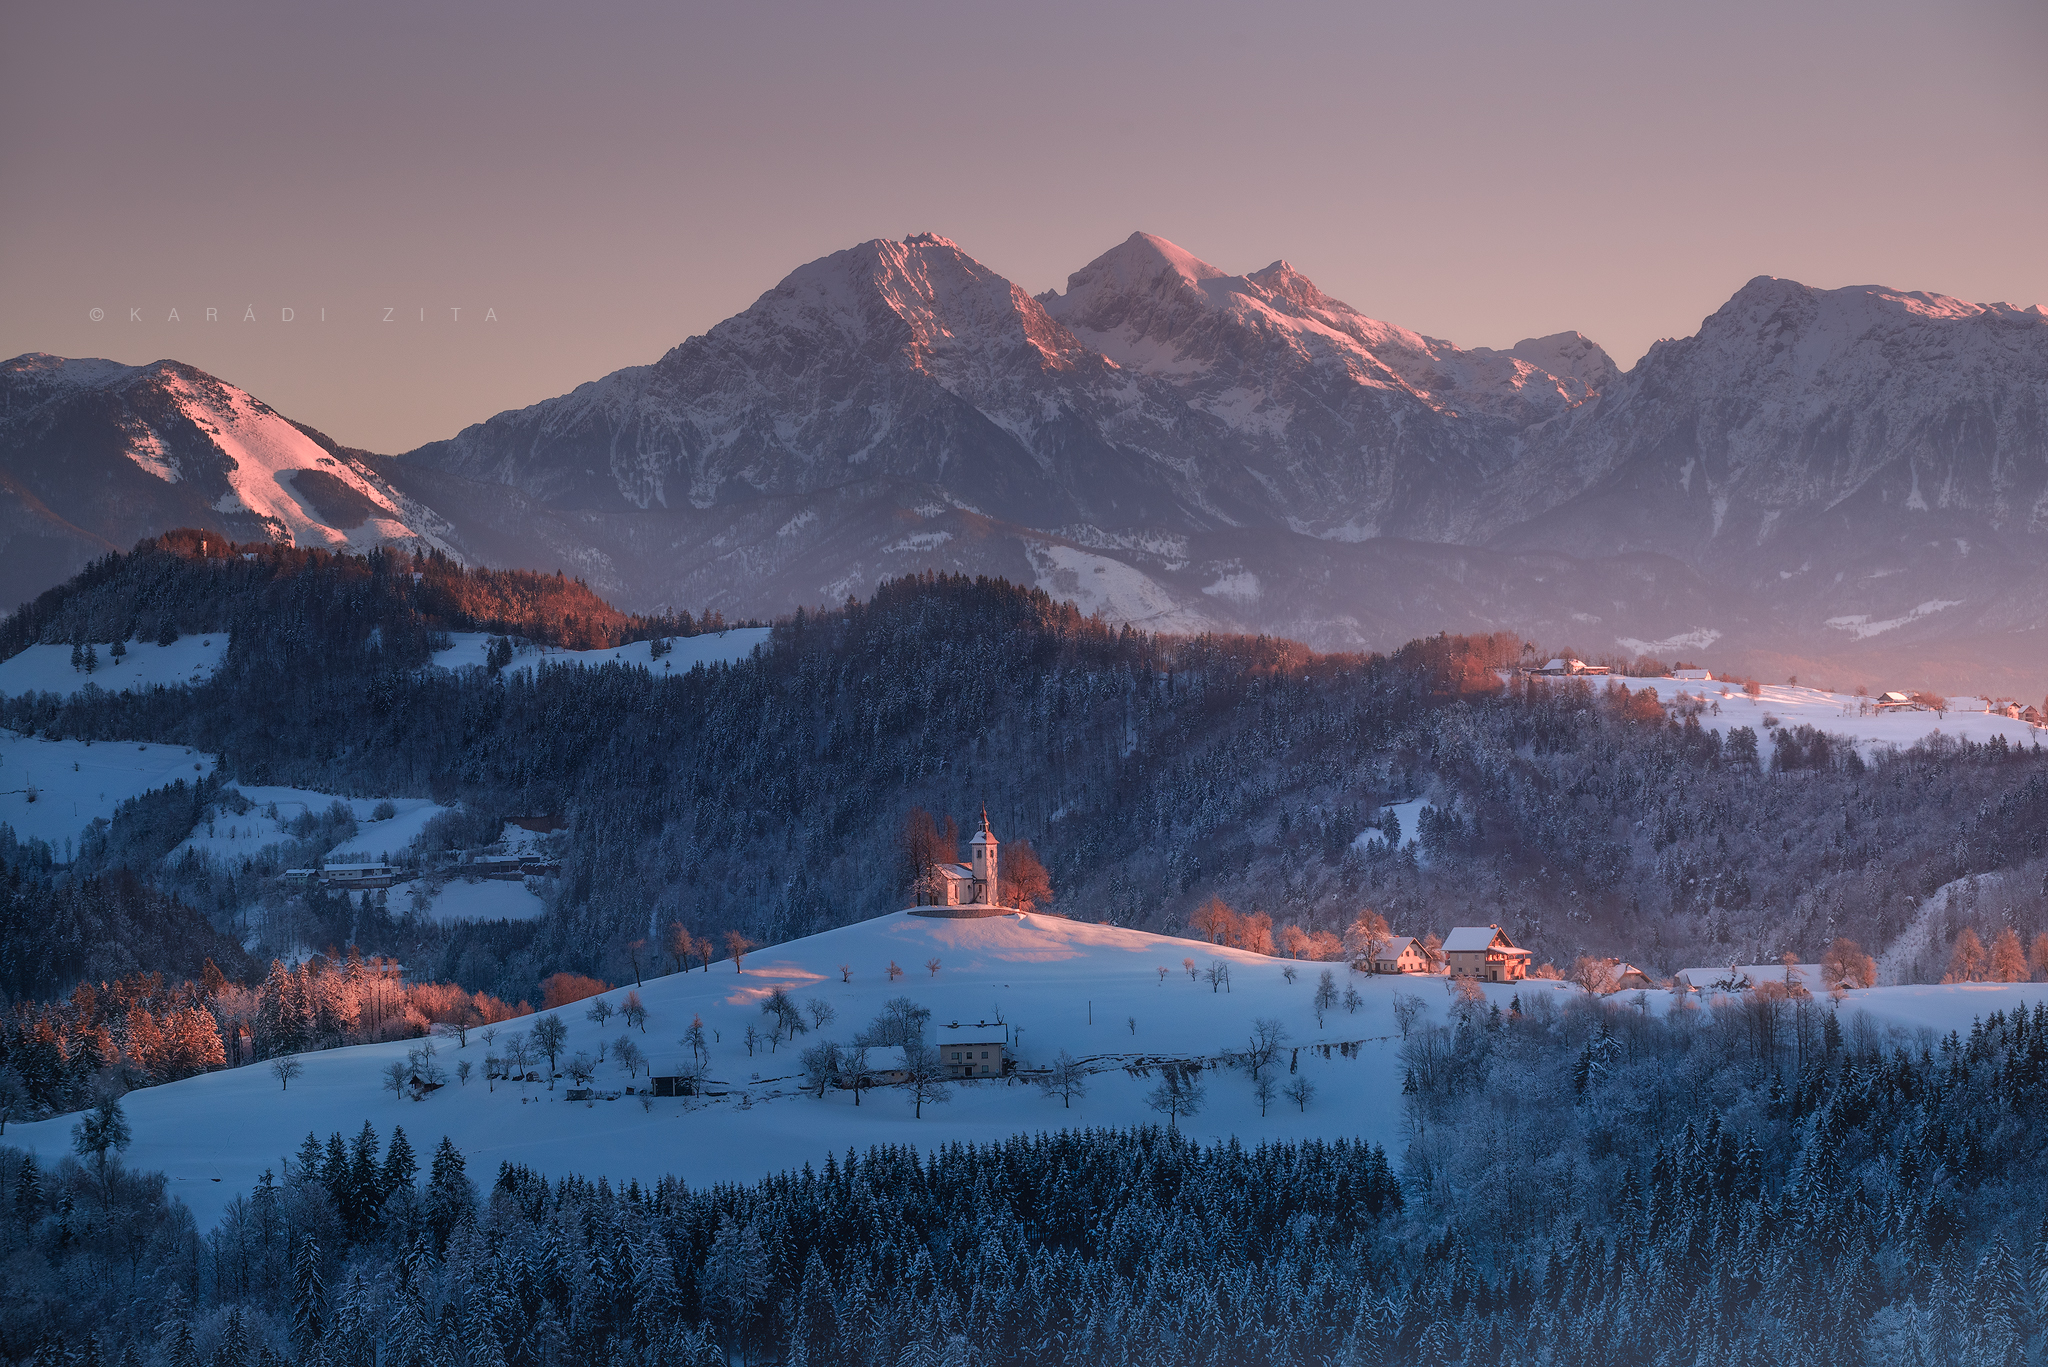 slovenia, sunrise, landscape, longexpo, nikon, autumn, winter, church,  mountain, clouds, snow, Karádi Zita